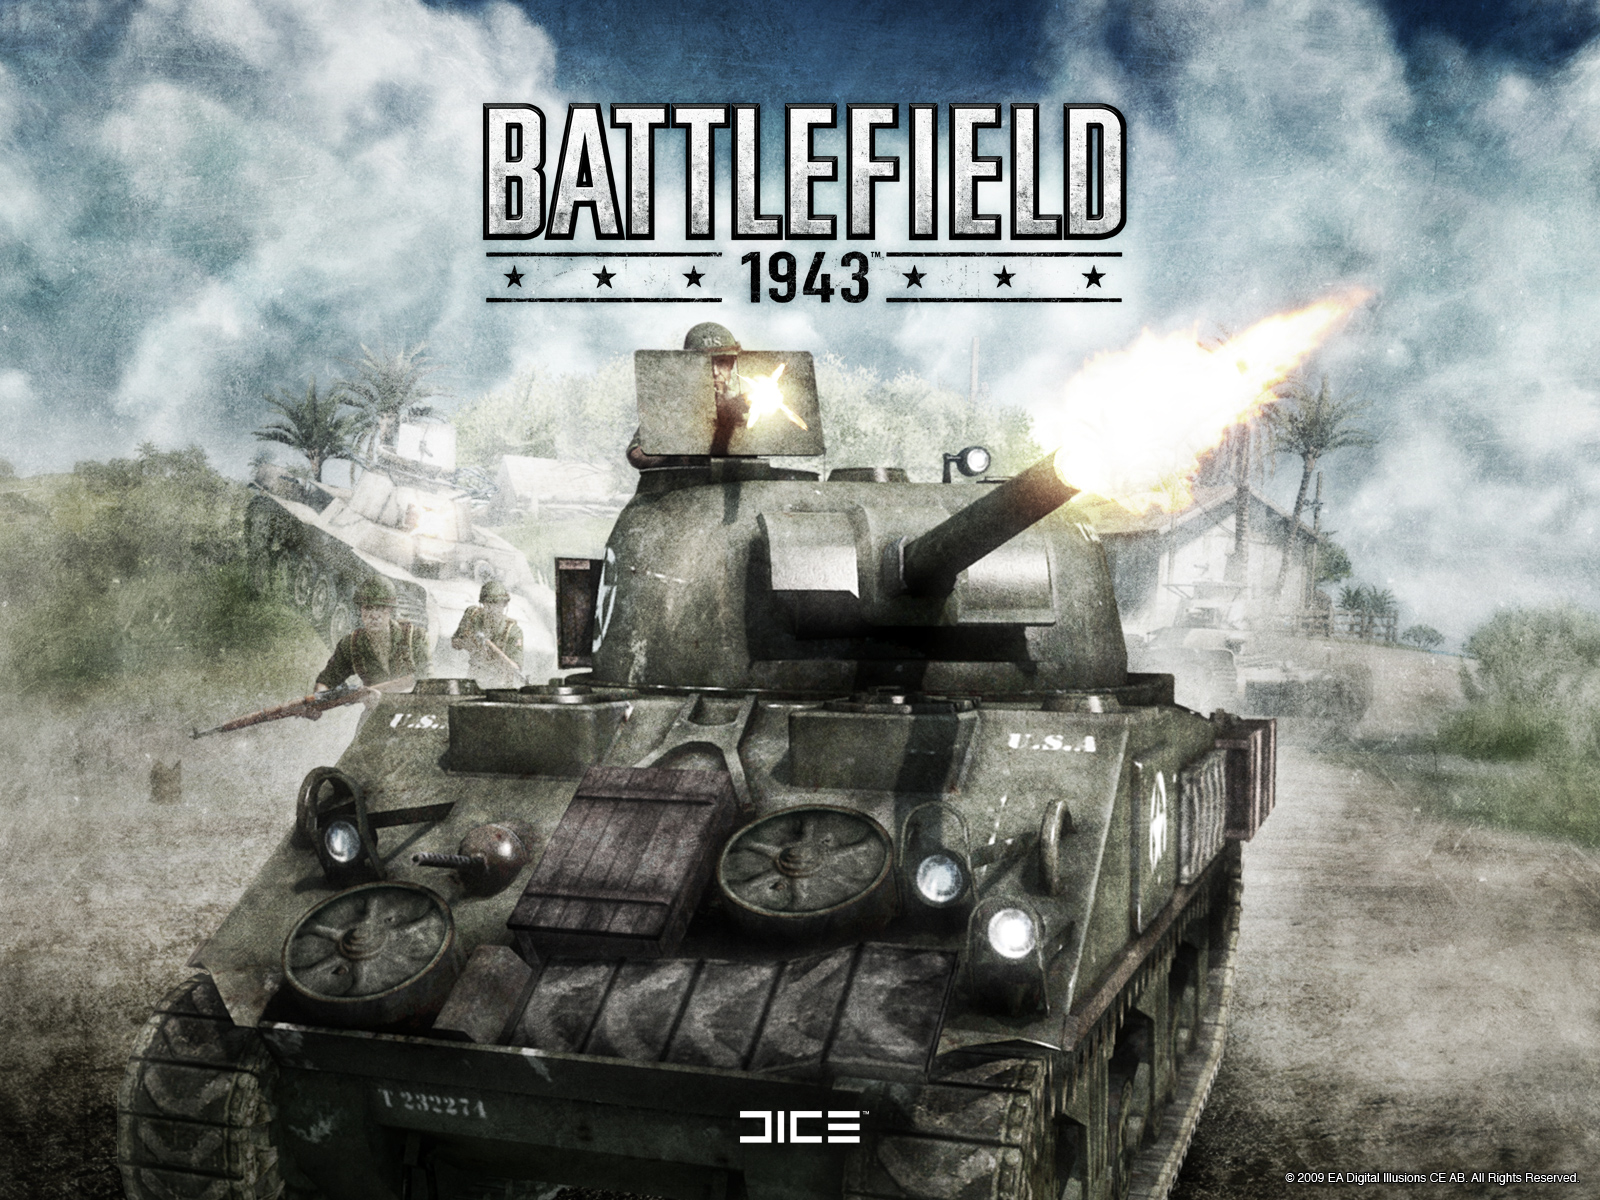    Battlefield_1943-2